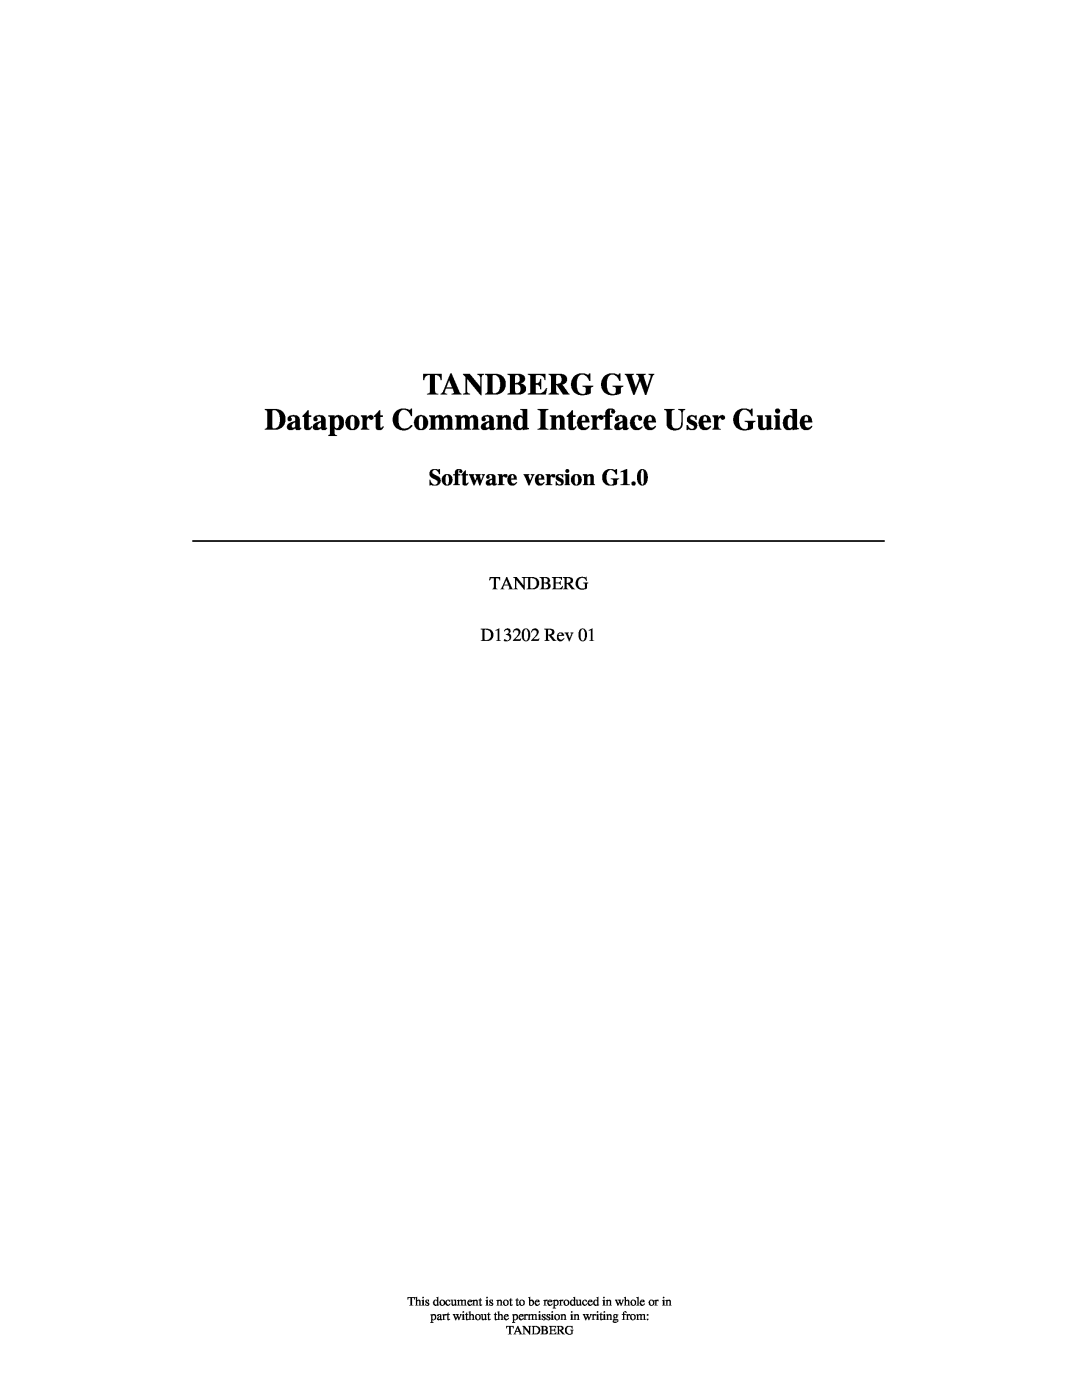 TANDBERG D13202 manual Software version G1.0, TANDBERG GW Dataport Command Interface User Guide 